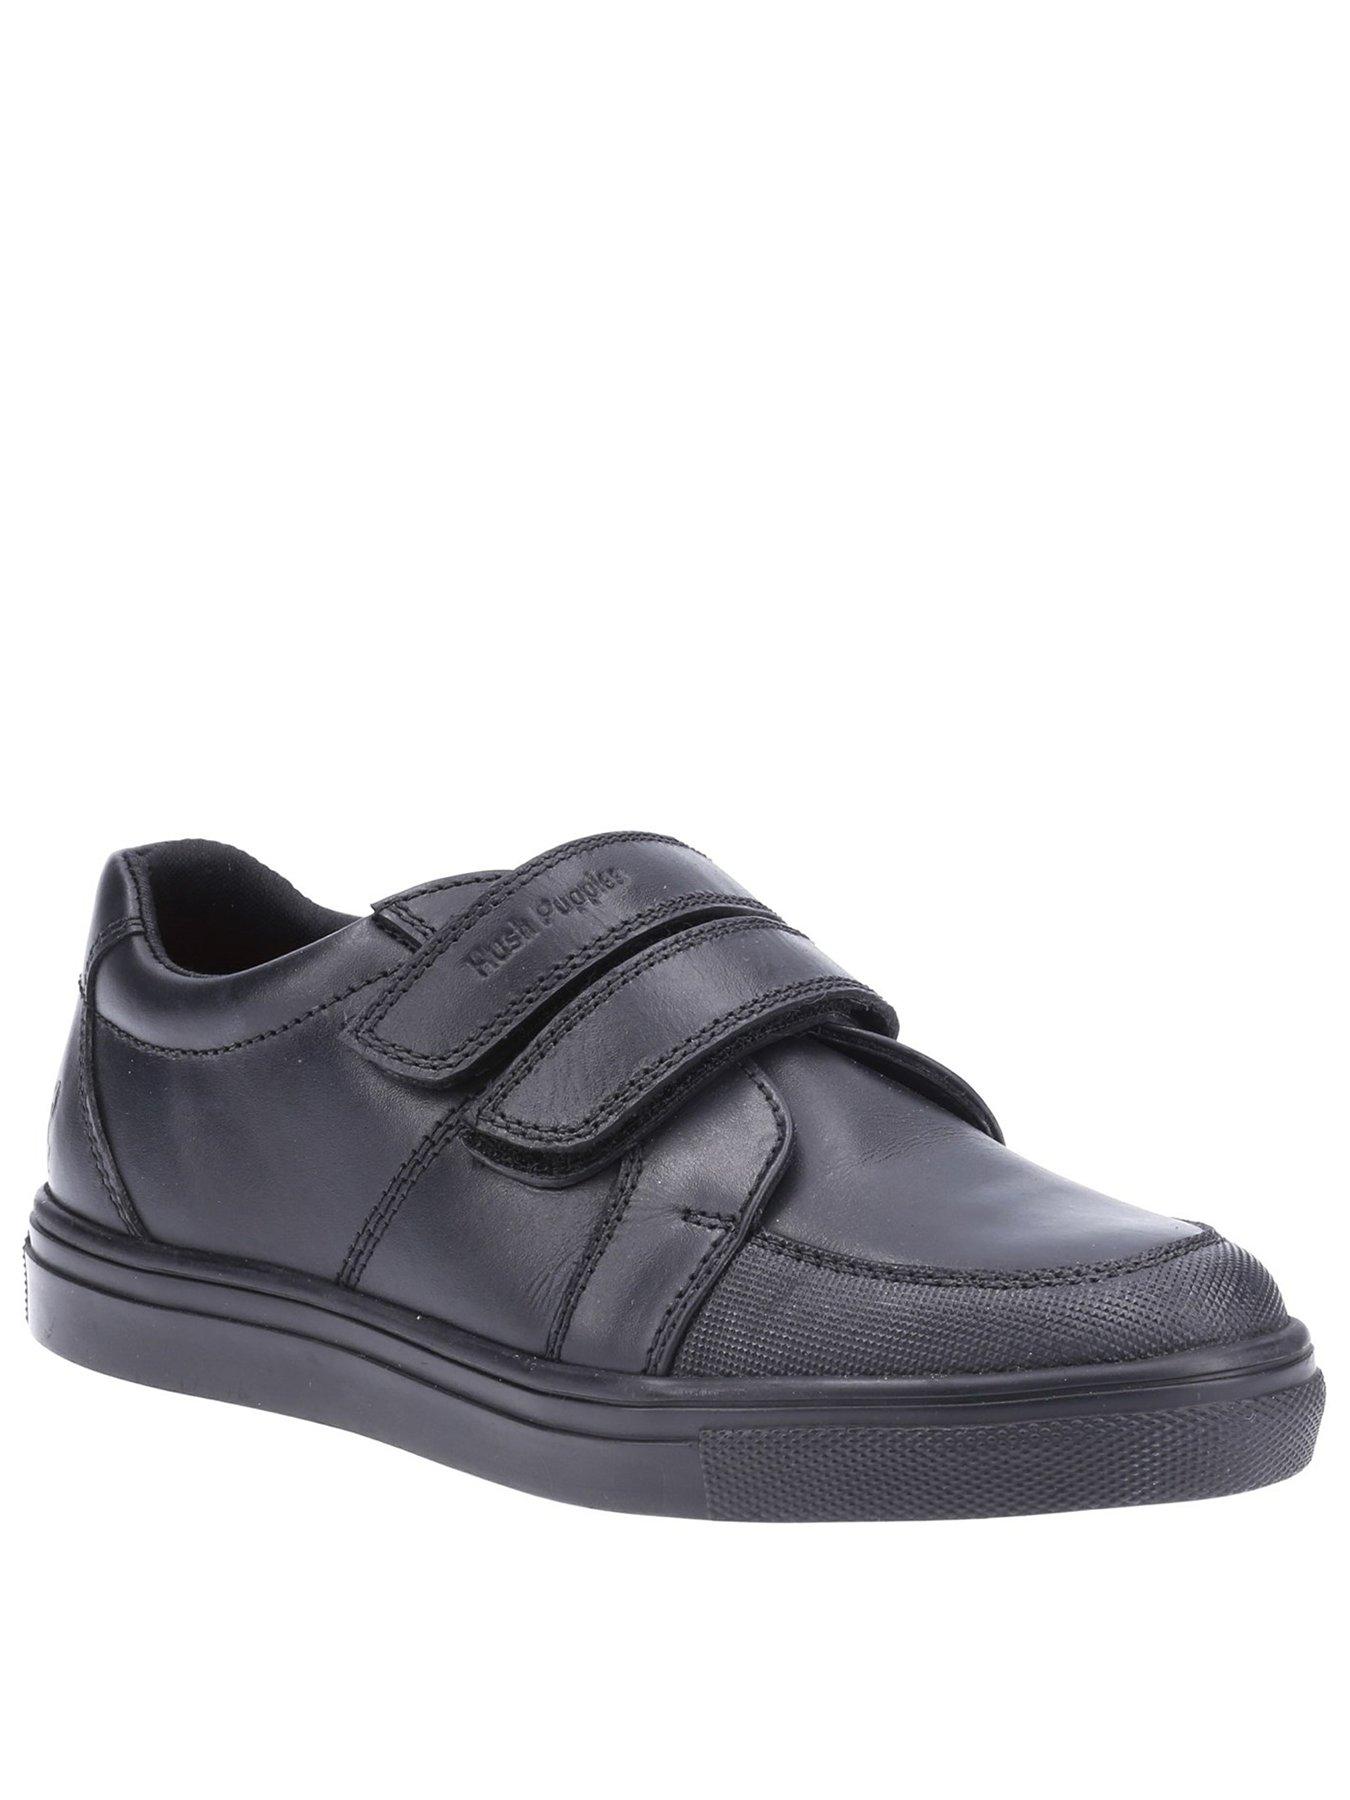 Kids Boys Santos Strap Back To School Shoes - Black